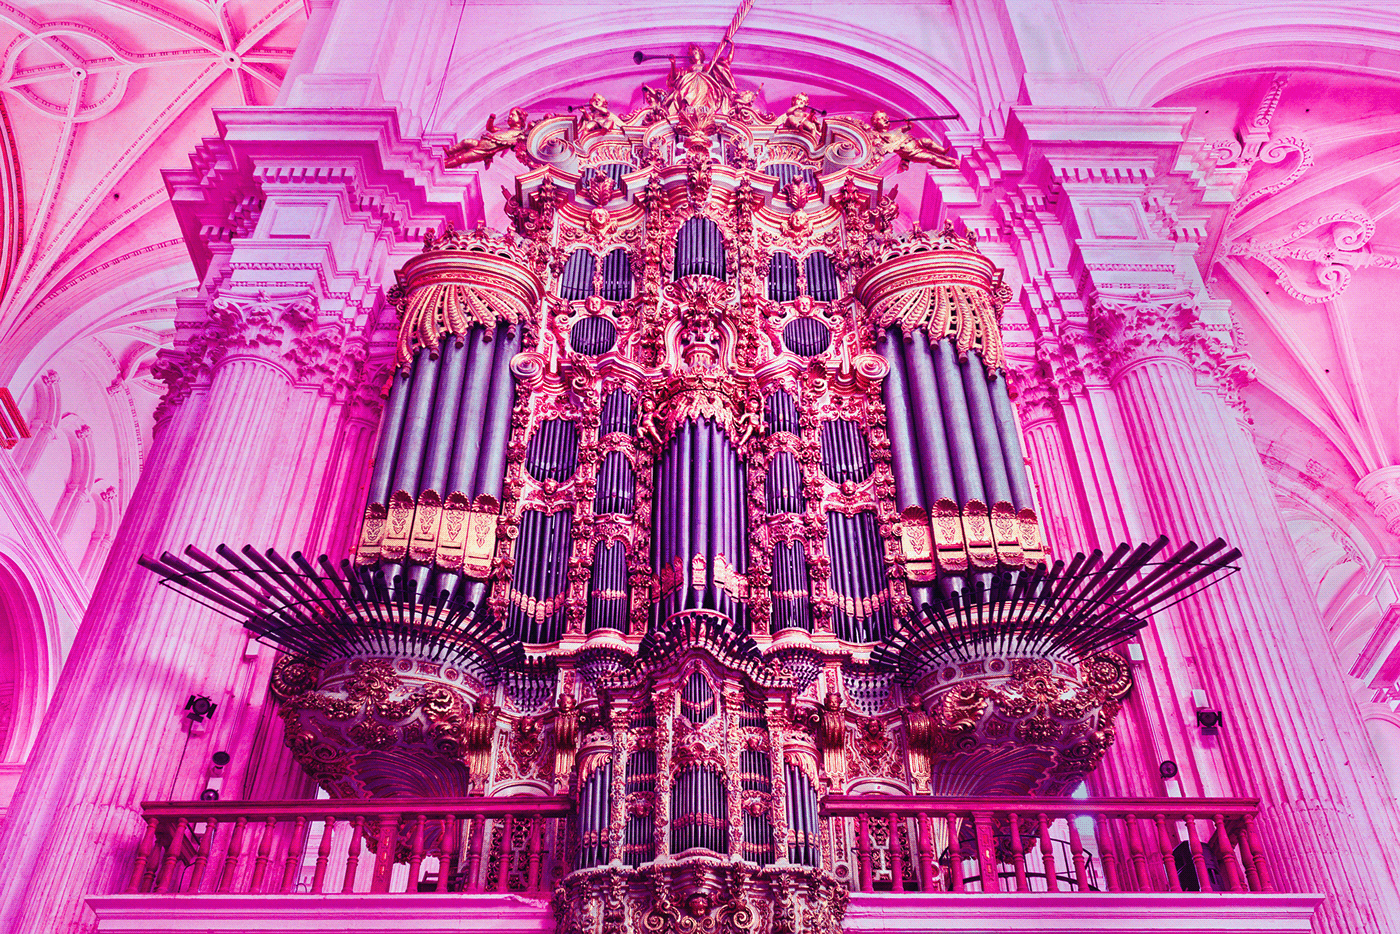 Pipe organ
Instrument
Catedral de Granada
CATEDRAL is the colored image for the alternative process.